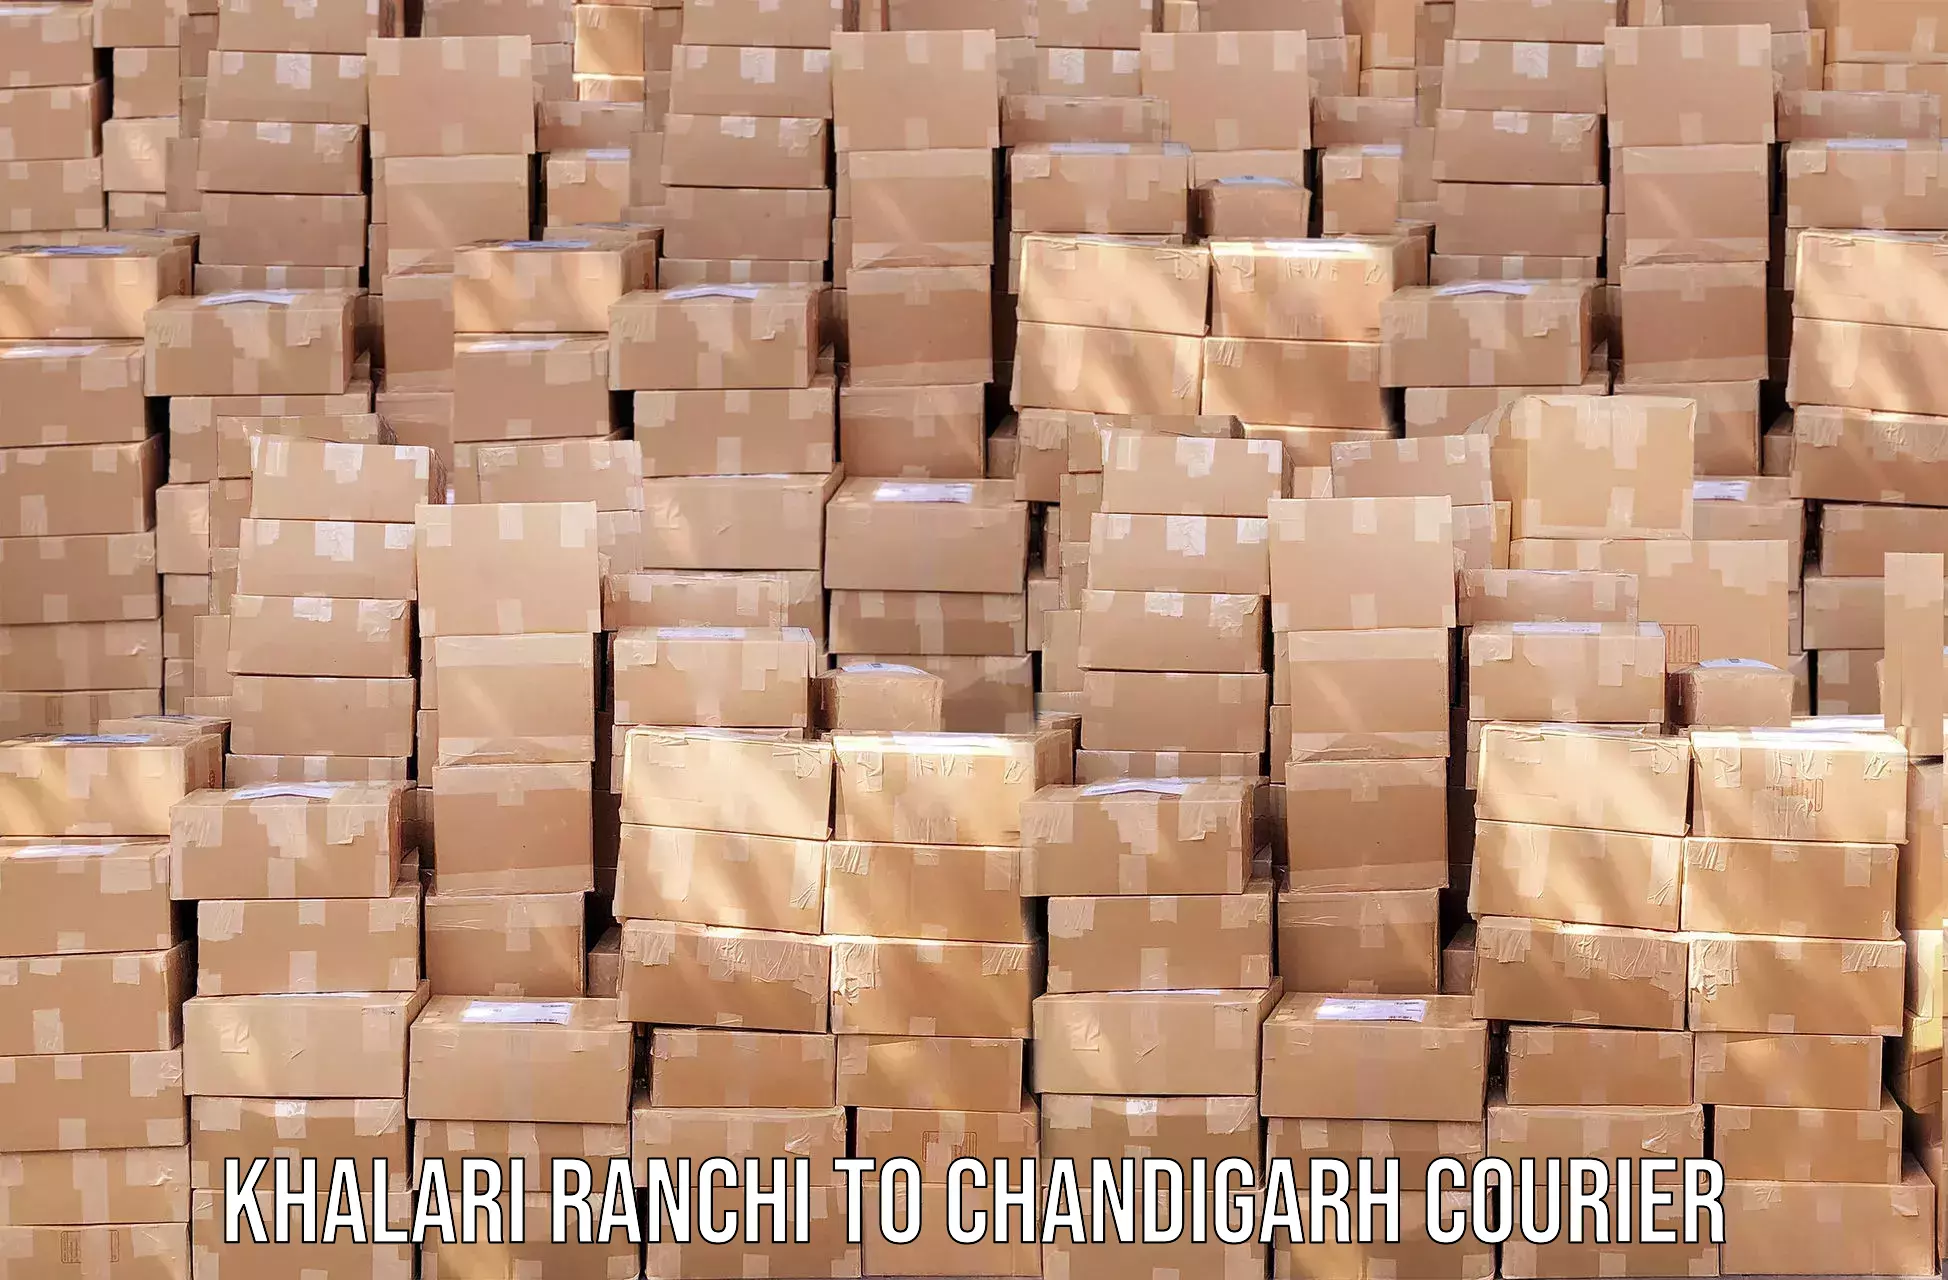 Nationwide parcel services Khalari Ranchi to Chandigarh